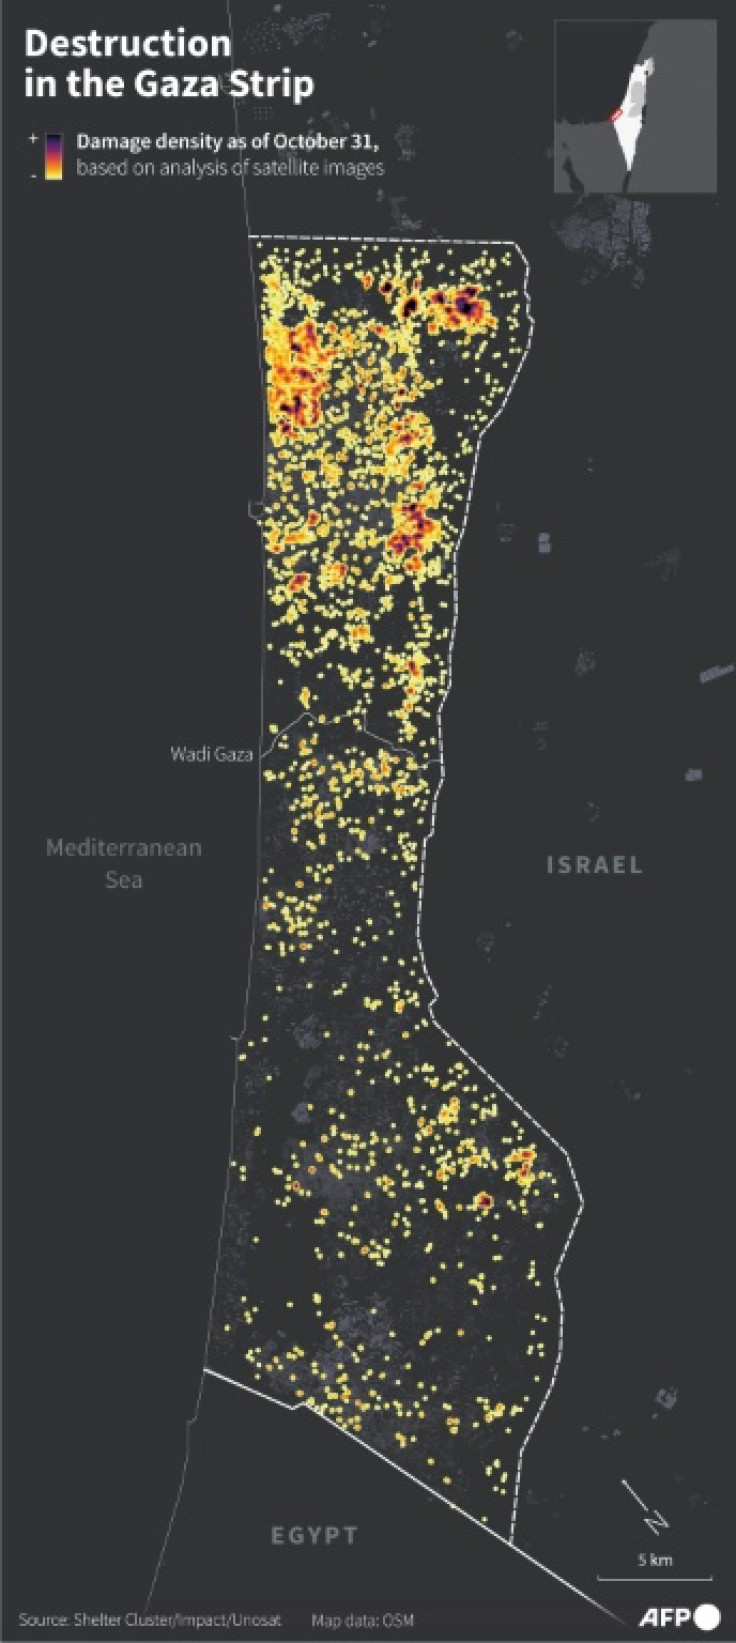 Map of Gaza Strip showing damage density as of October 31, based on analysis of satellite images